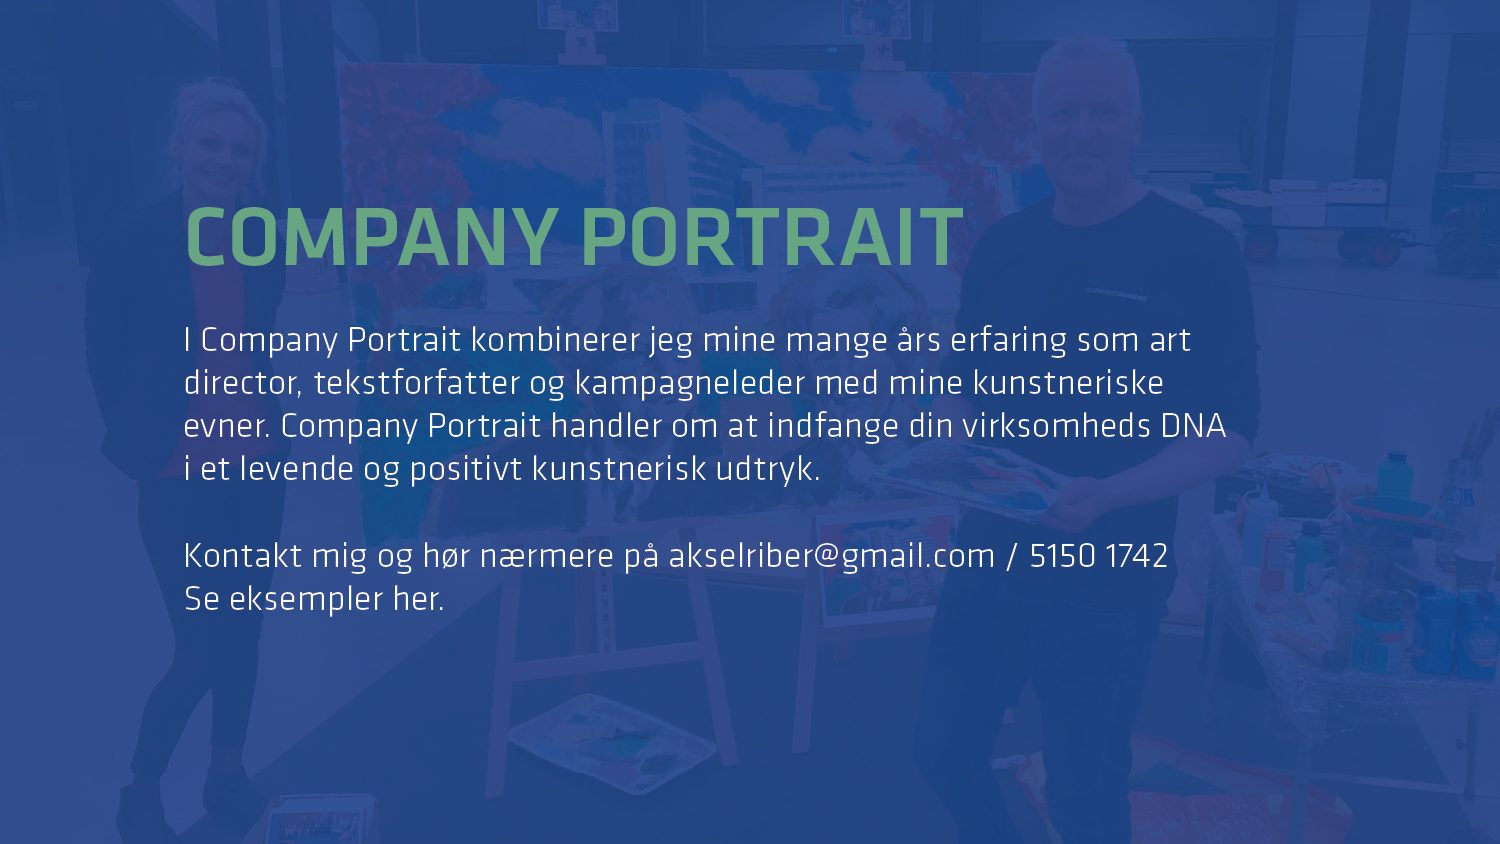 Company portrait